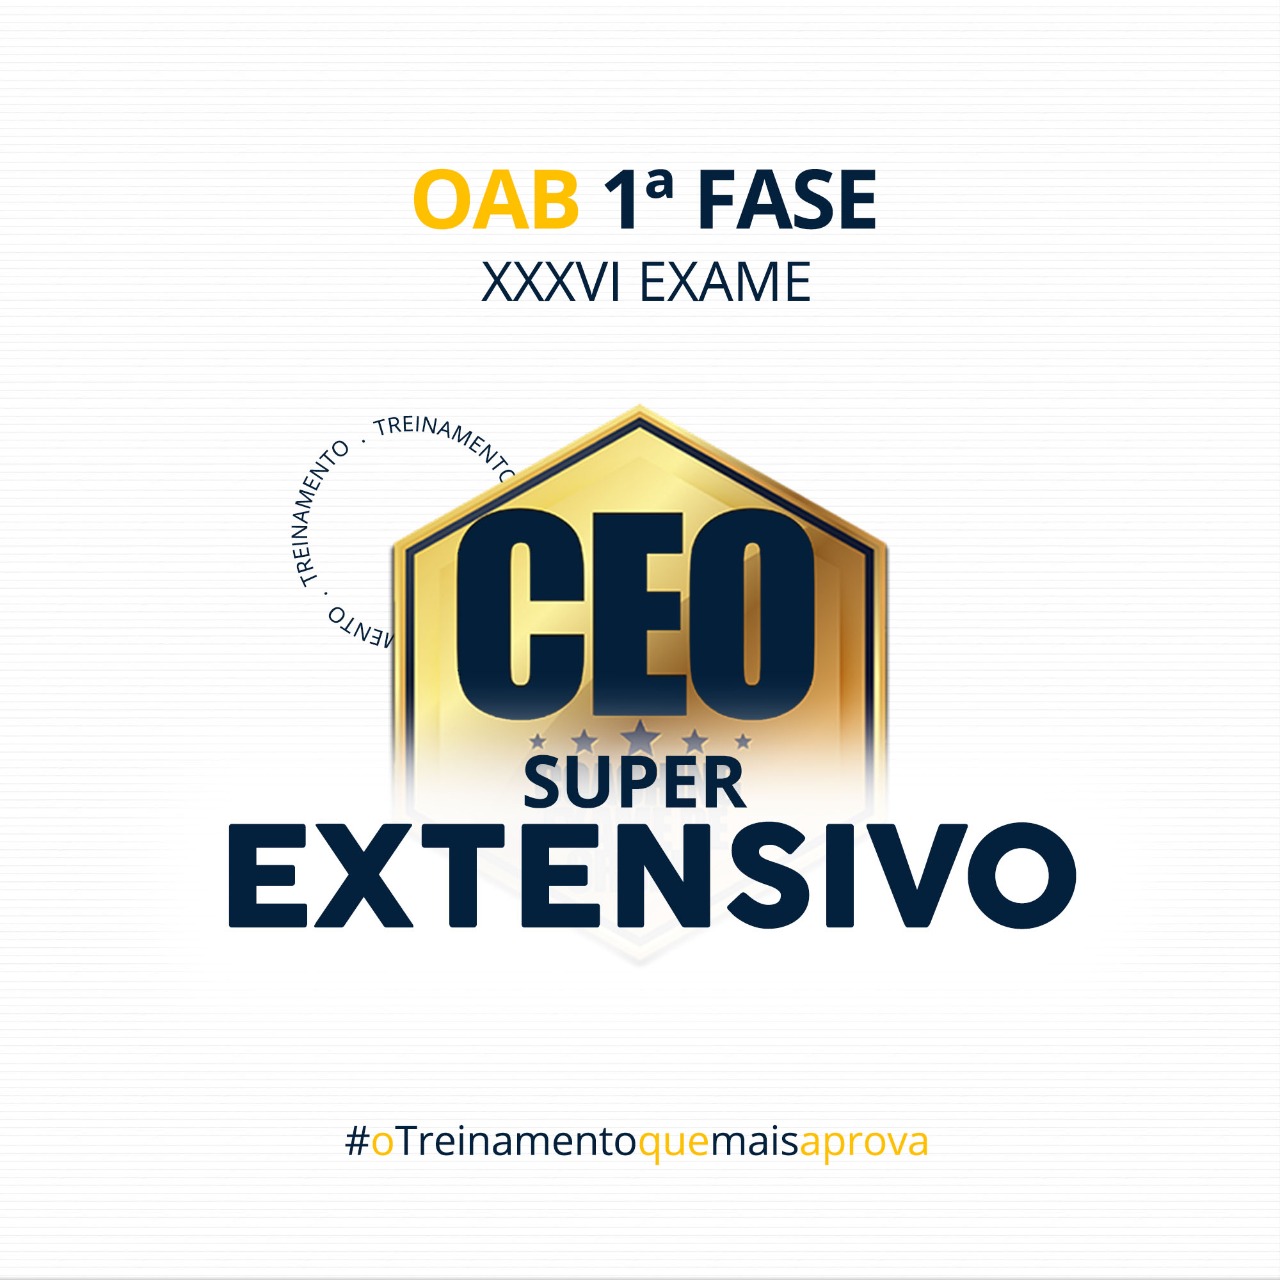 CEO SUPER EXTENSIVO XXXVI EXAME - OAB 1ª FASE